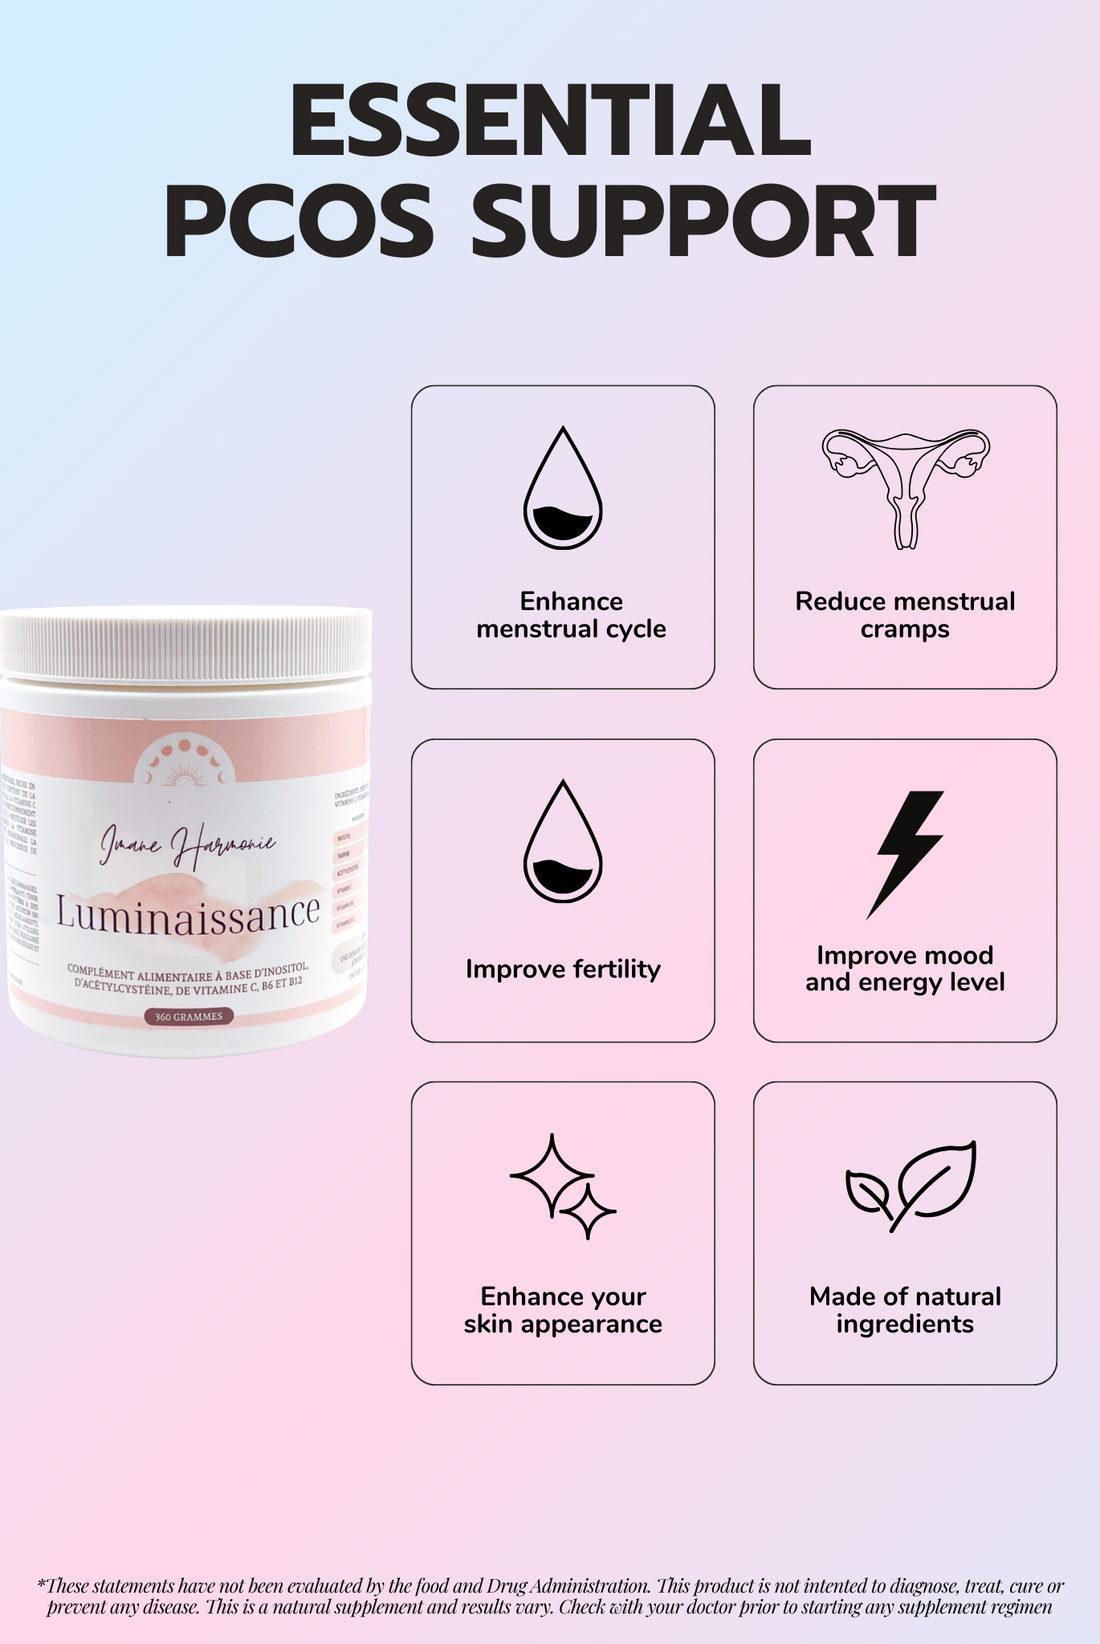 Features of the luminaissance supplement